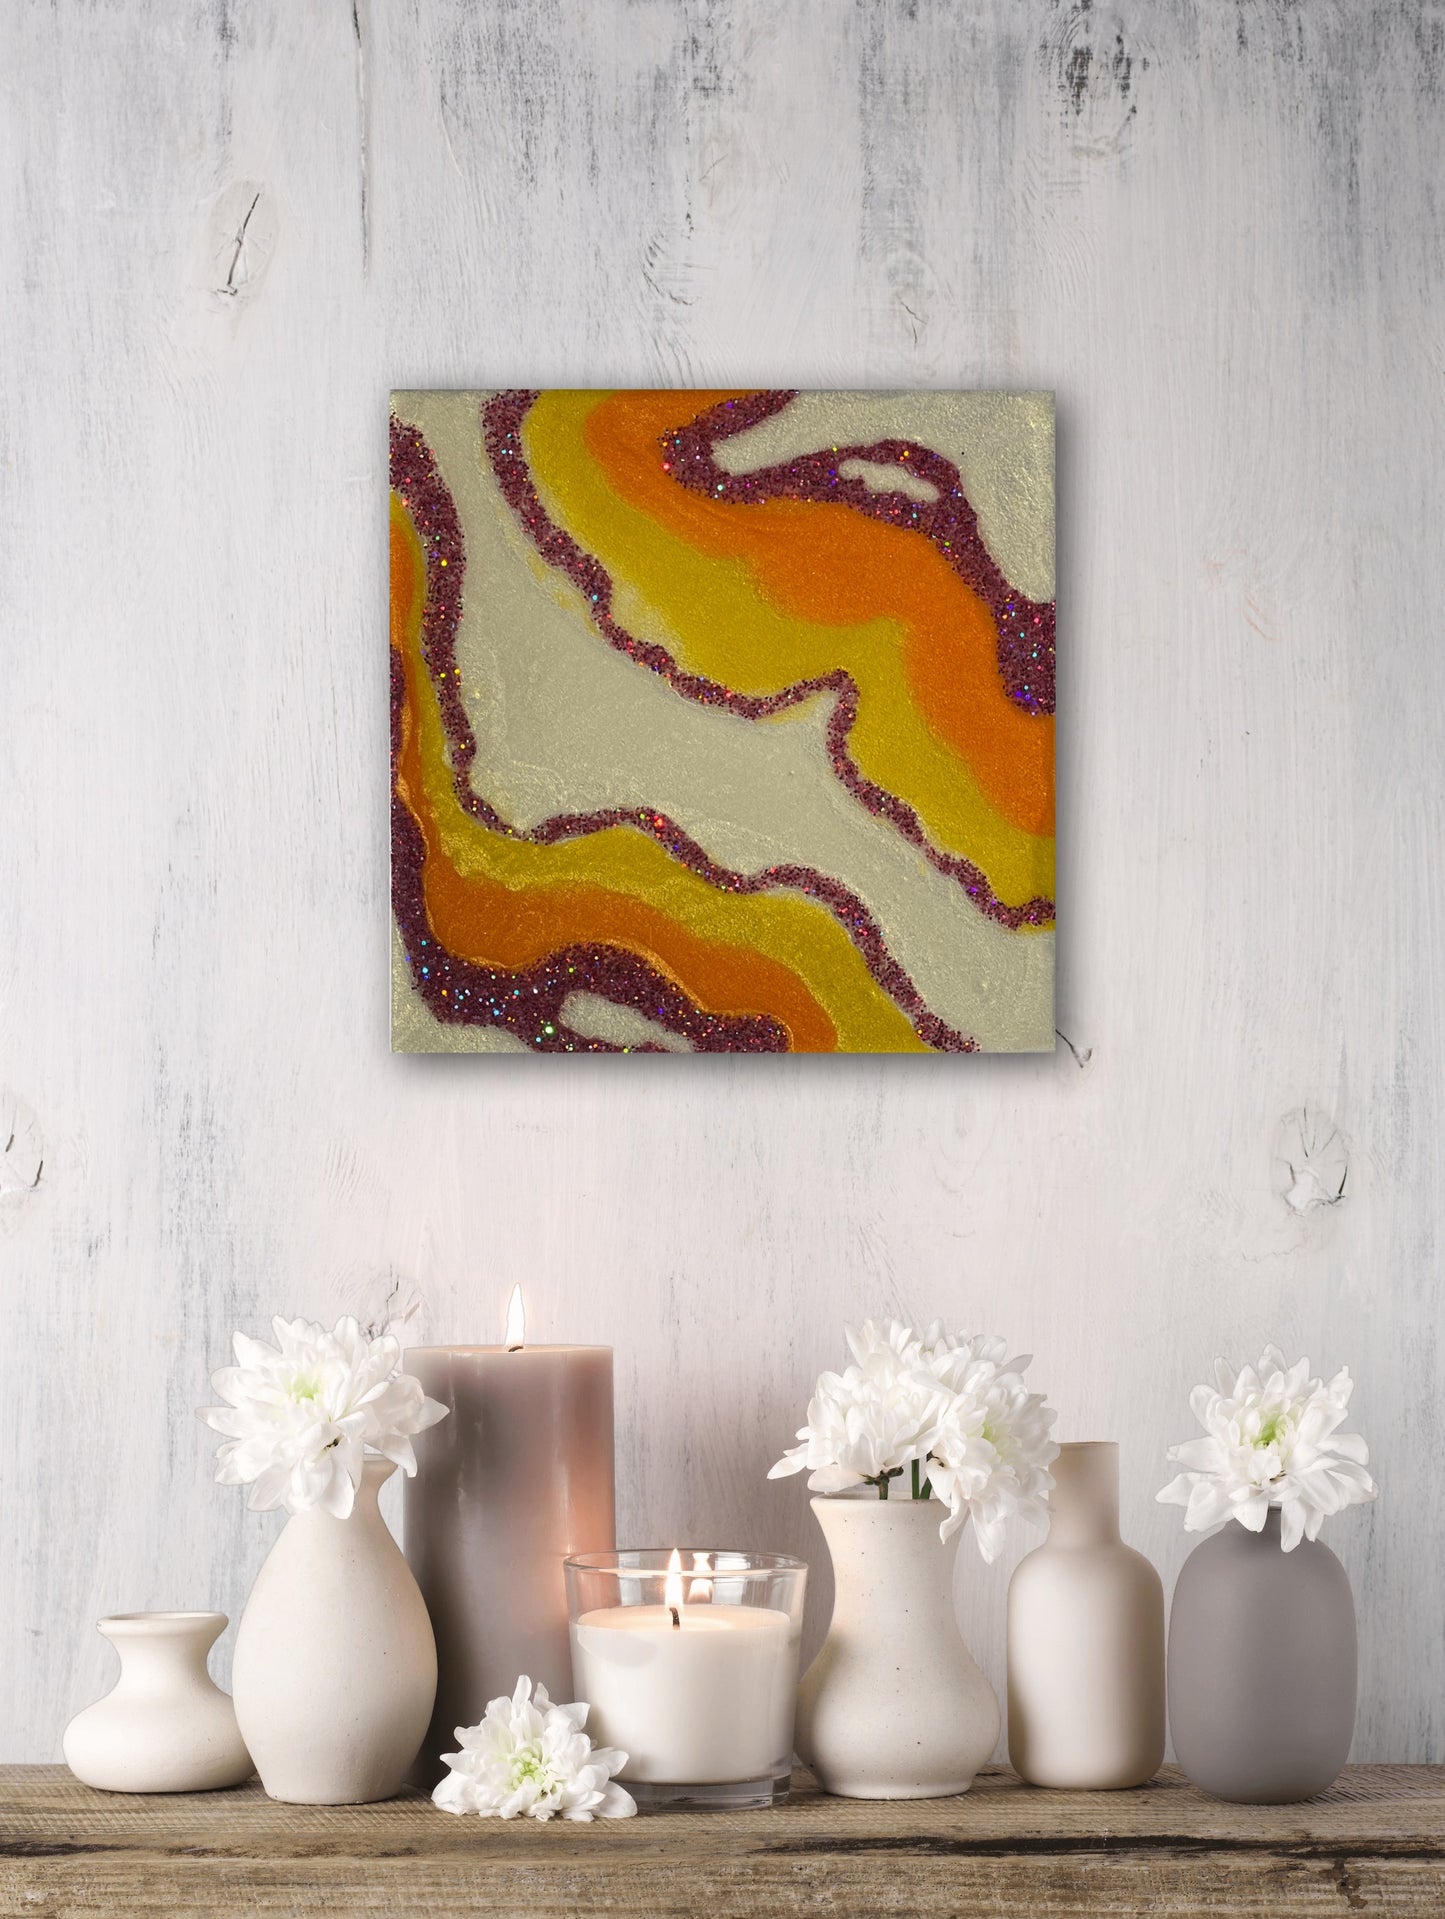 10 x 10" inch Orange Resin Art